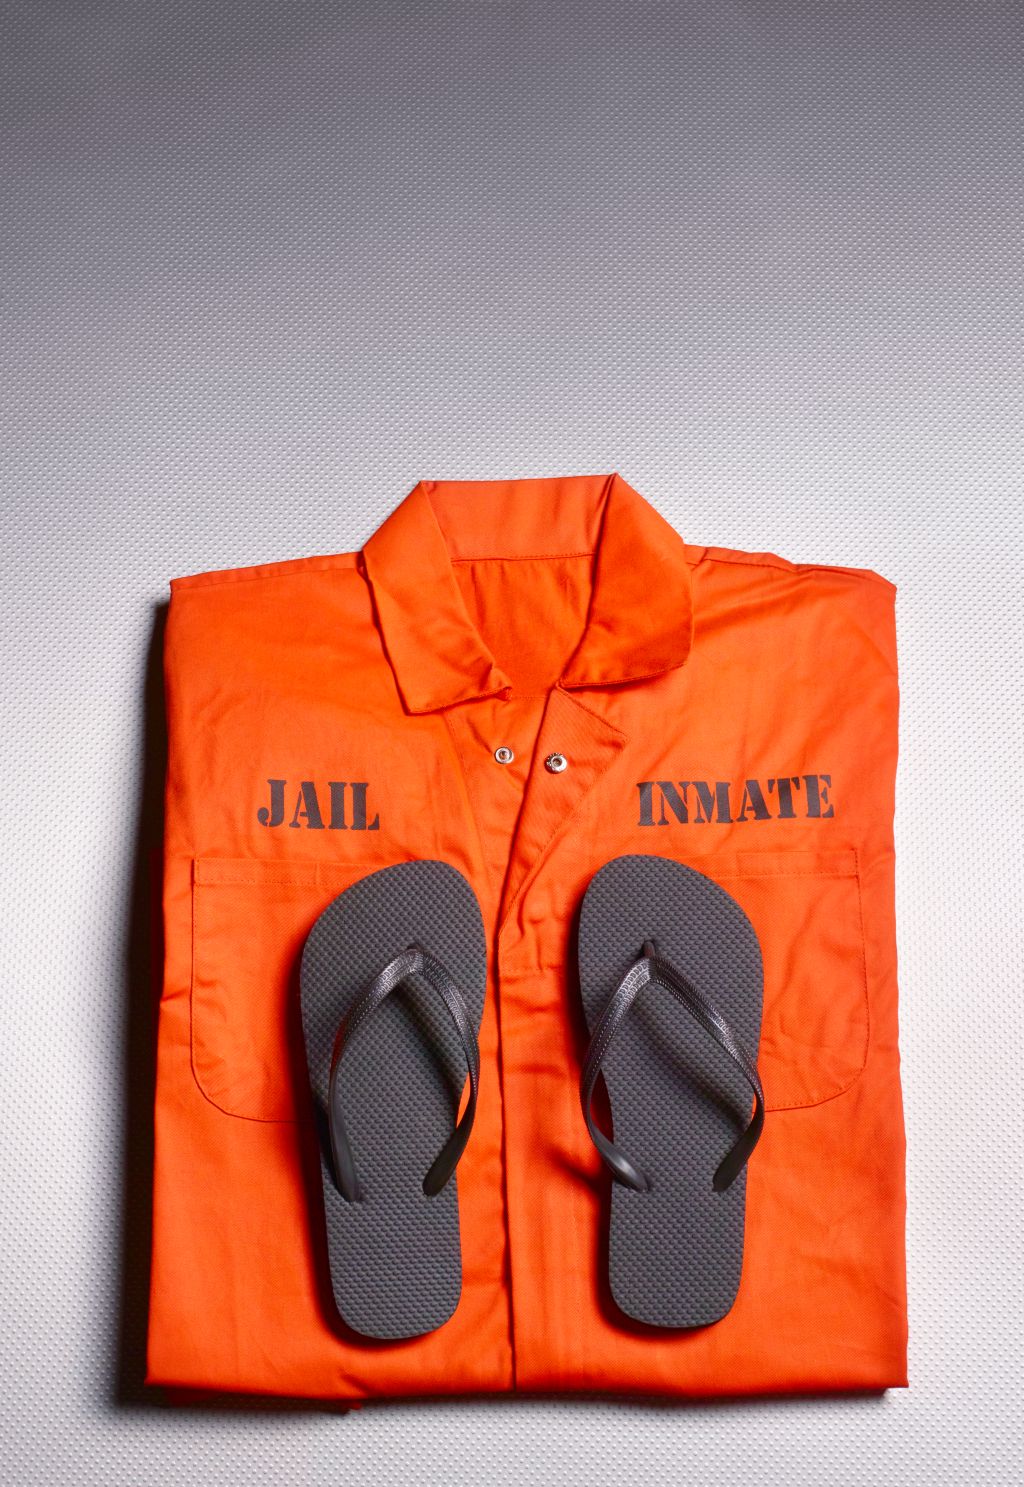 Orange jump suit in prison cell